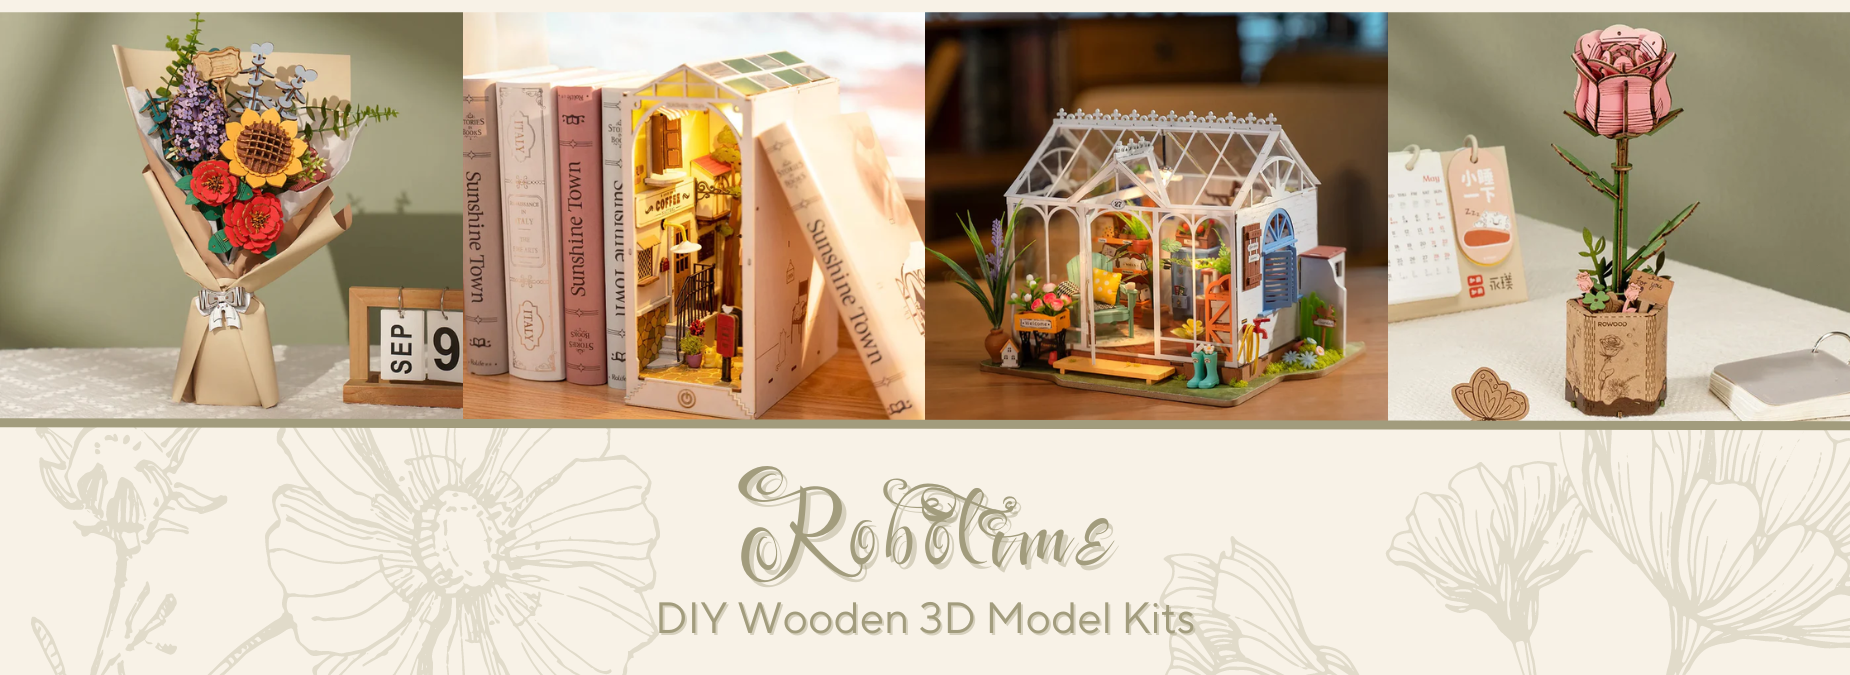 Robotime - DIY Wooden 3D Model Kits